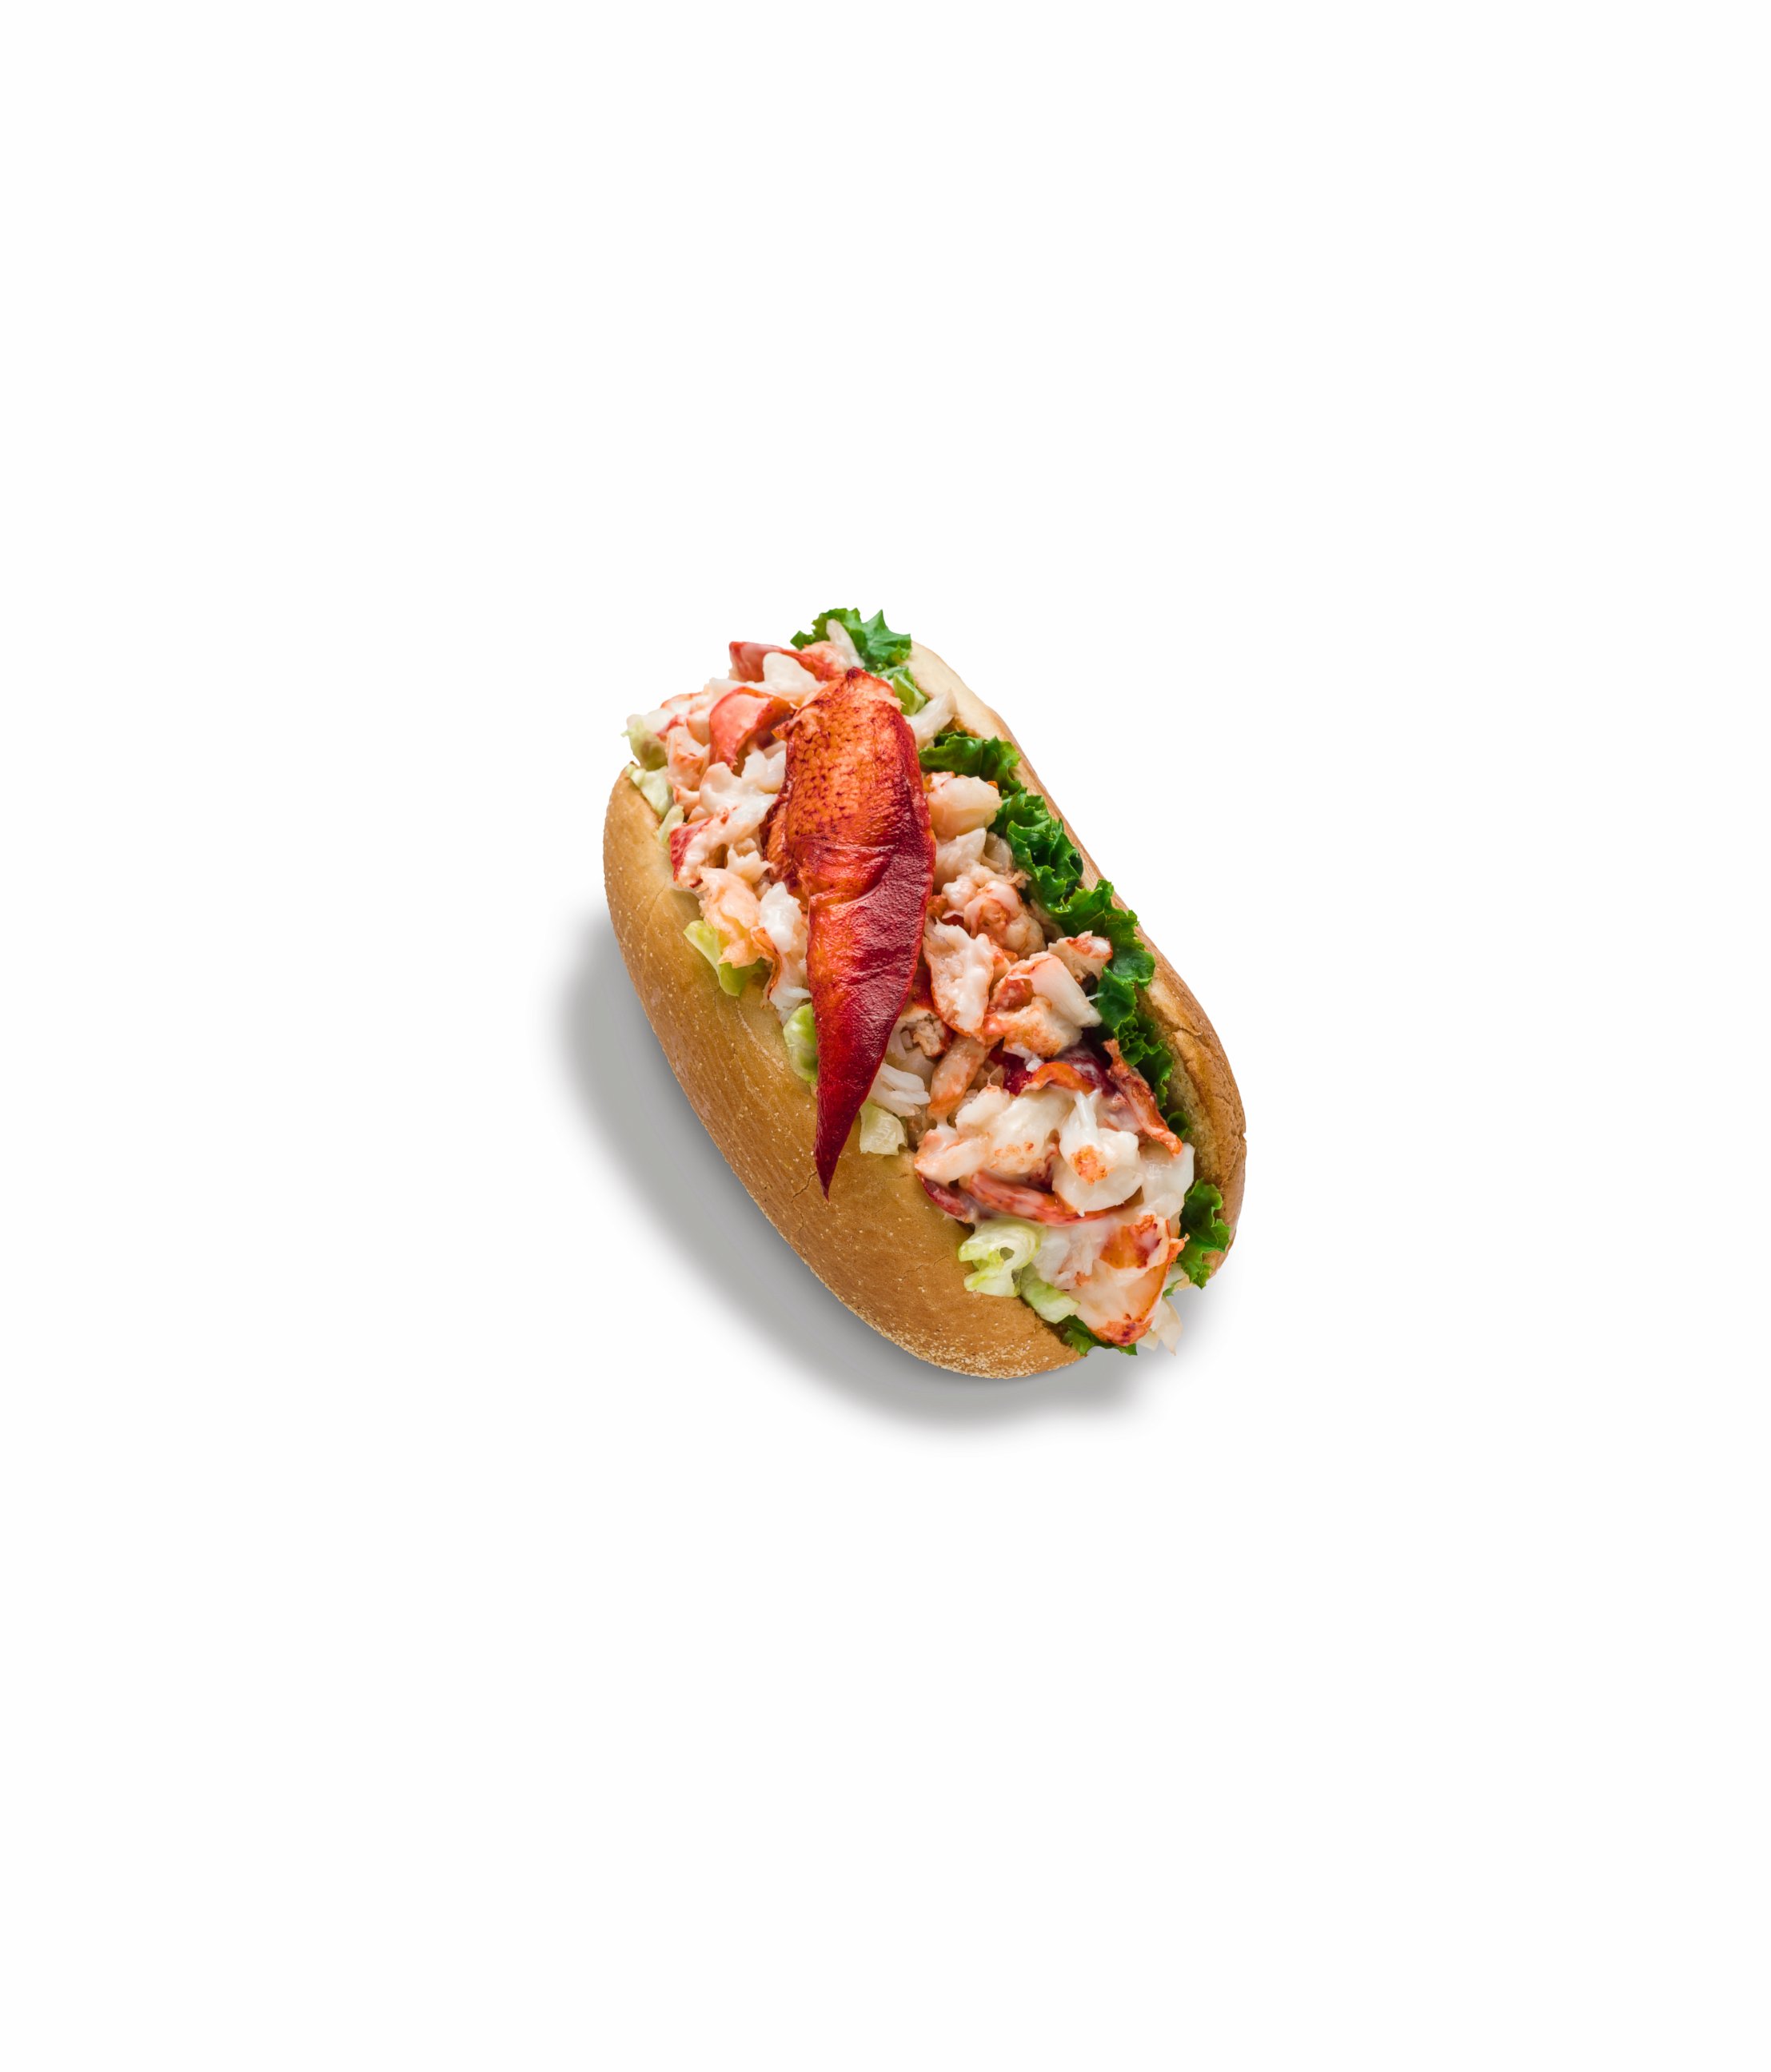 PHOTO: McDonald's Lobster Roll